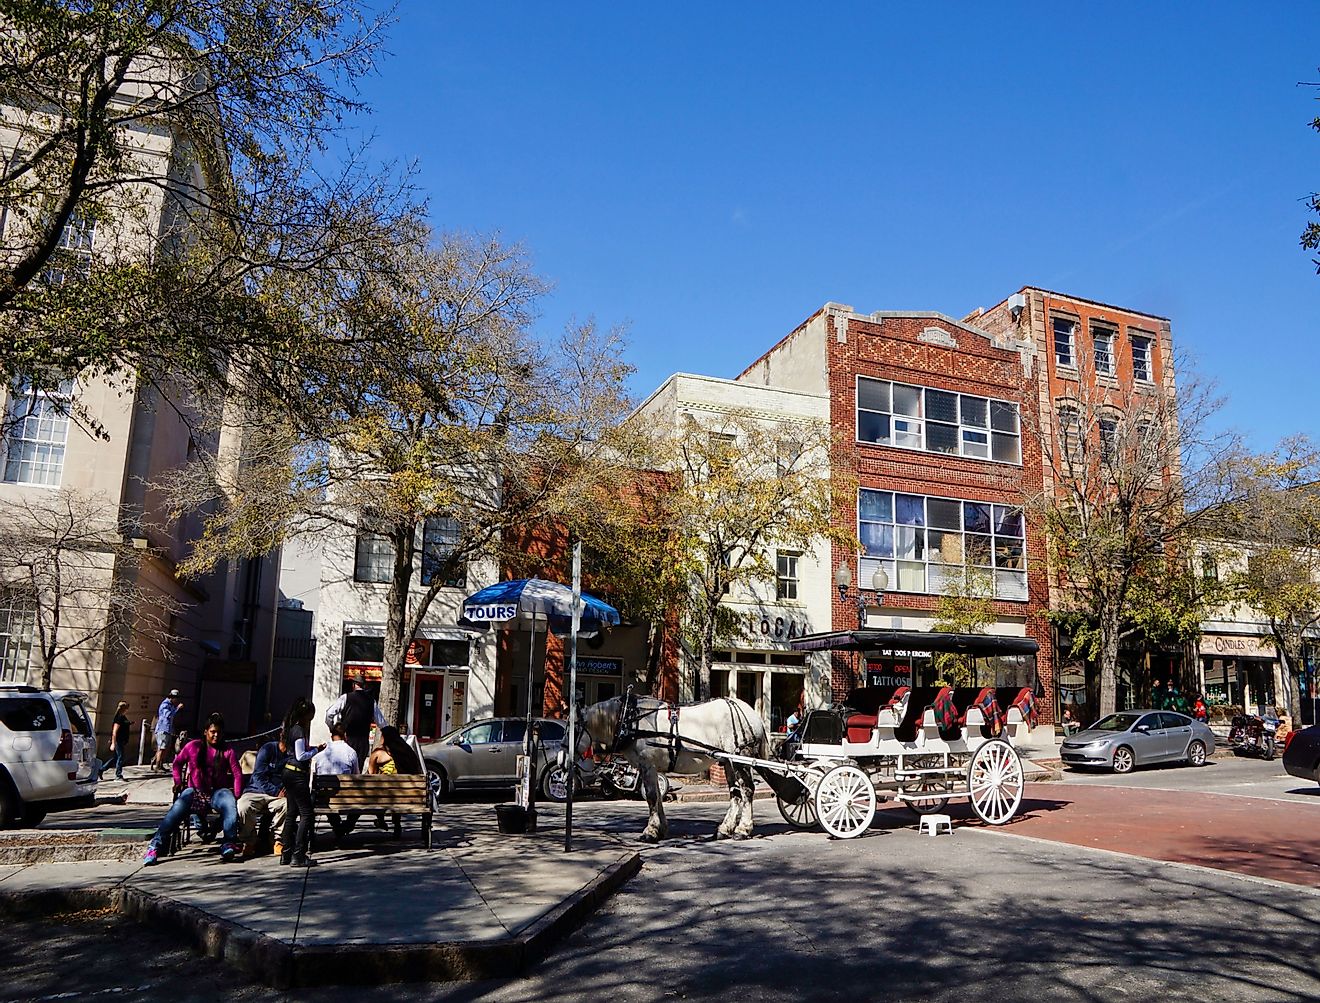 Downtown Wilmington, North Carolina USA. Image credit Bennekom via shutterstock